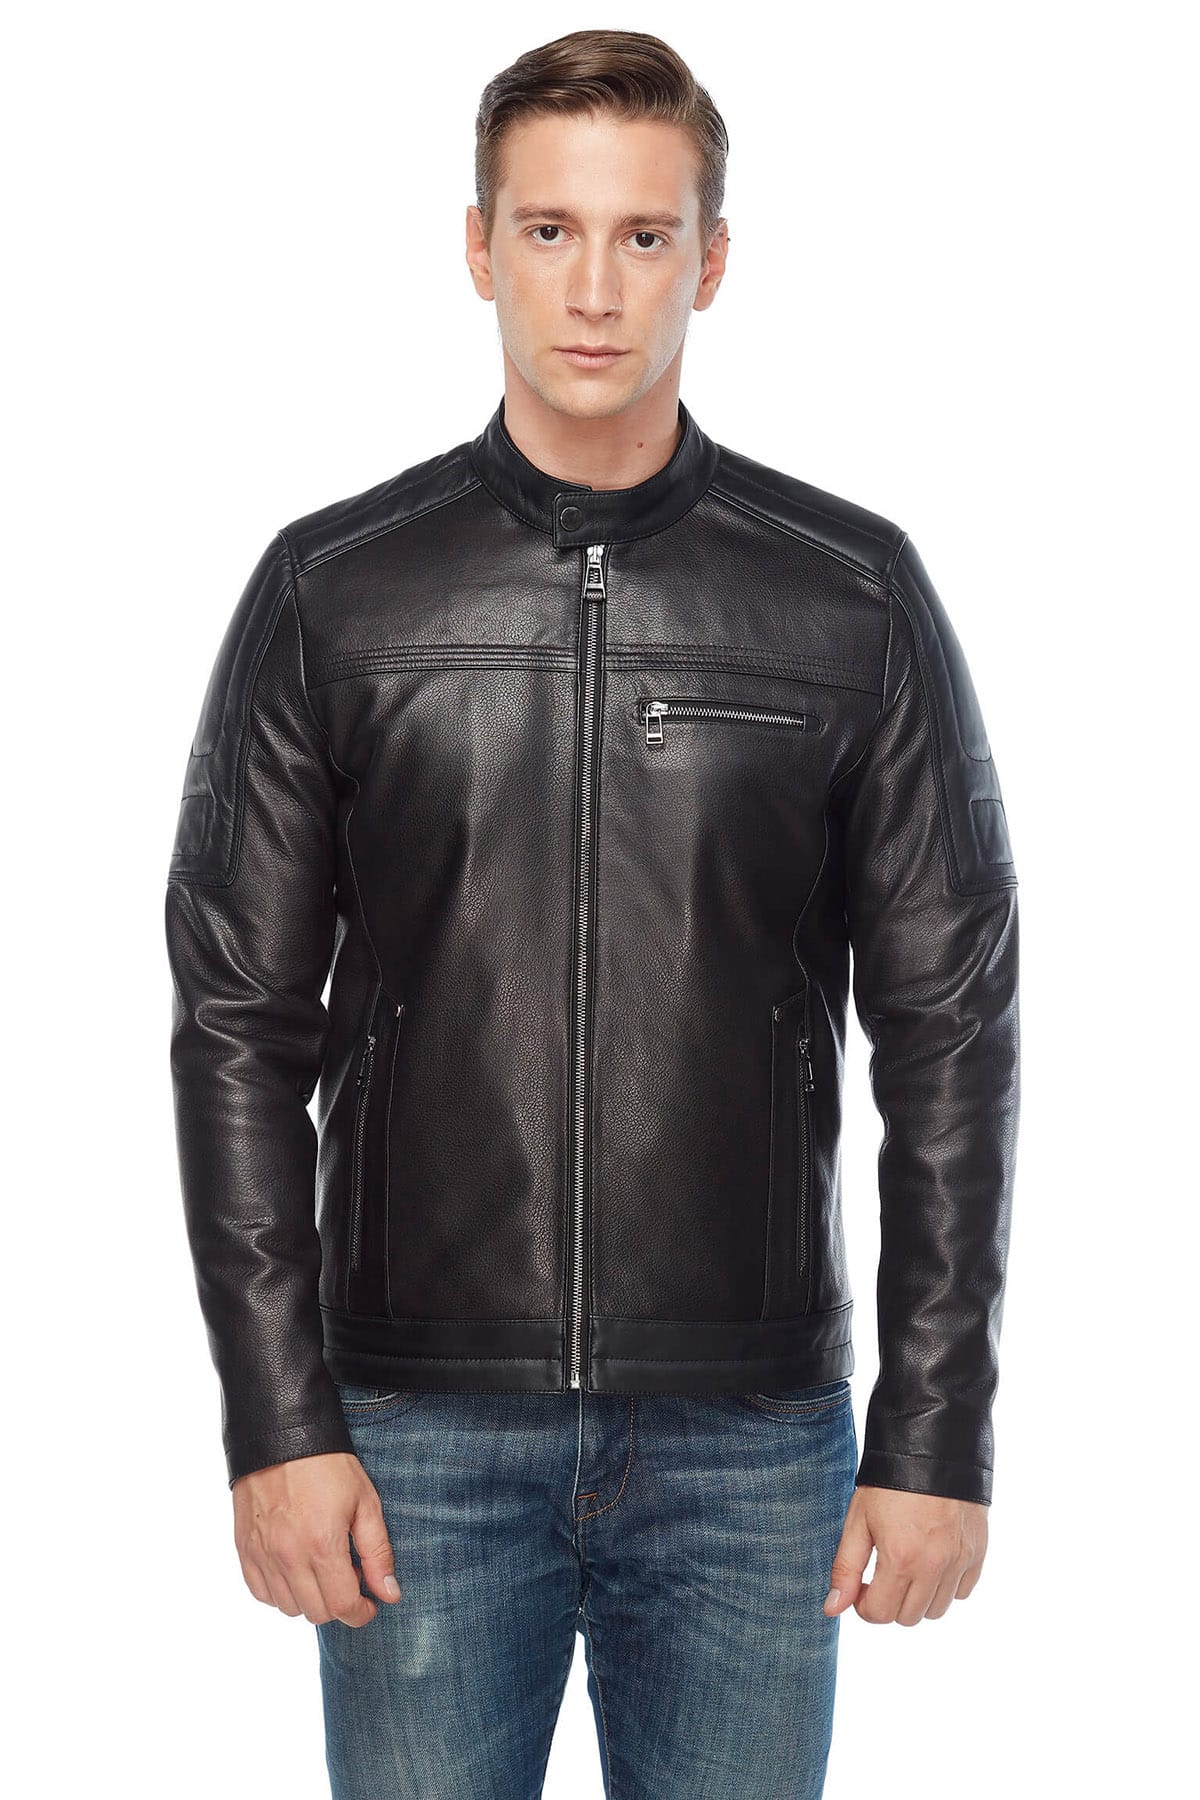 Oliver Cheshire Leather Sport Black Leather Jacket2